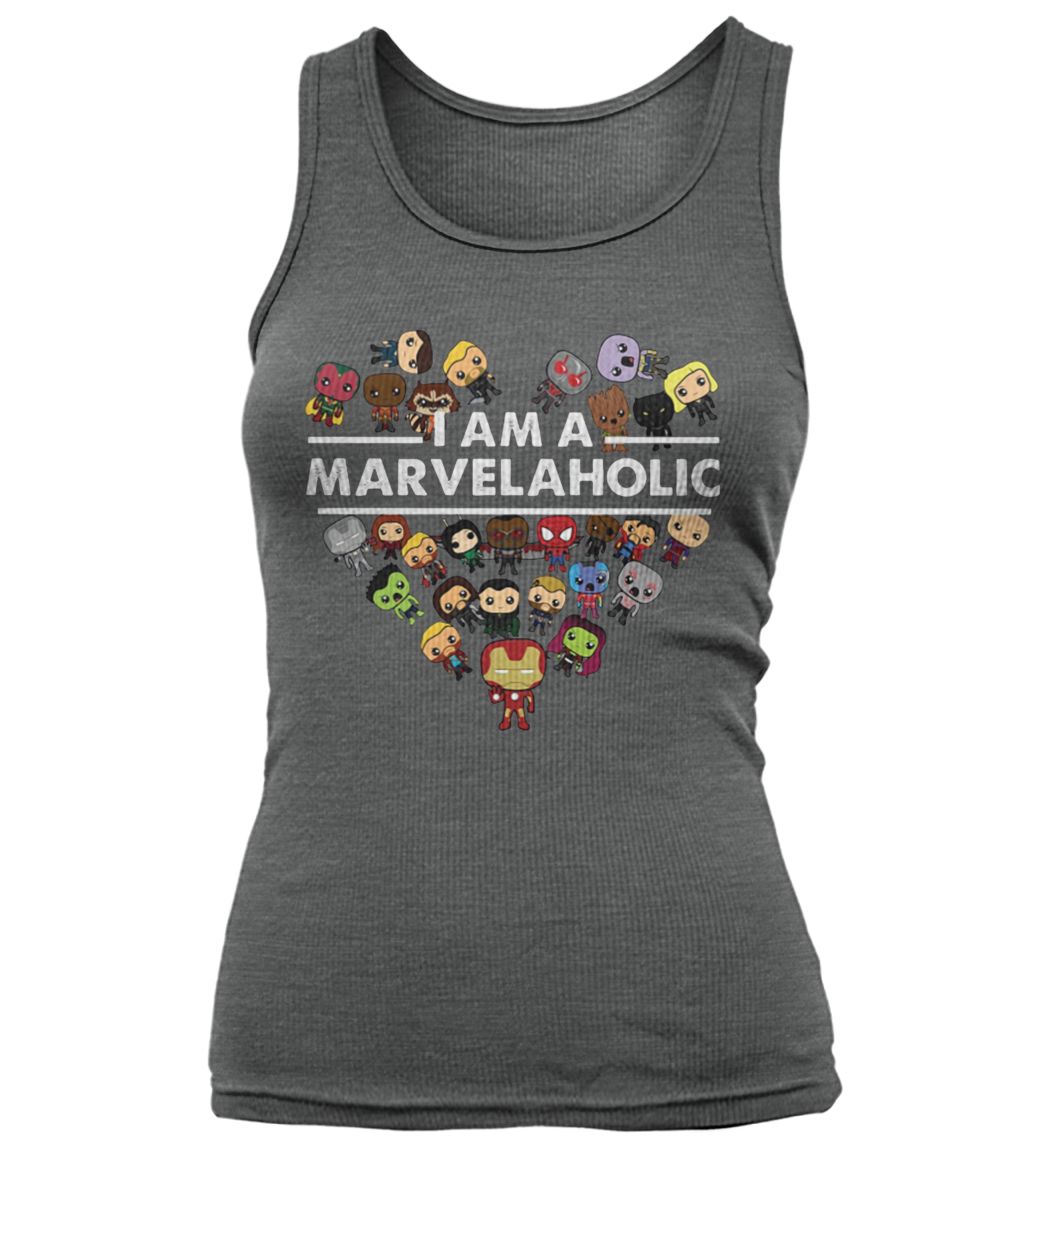 Marvel avengers I am a marvelaholic women's tank top